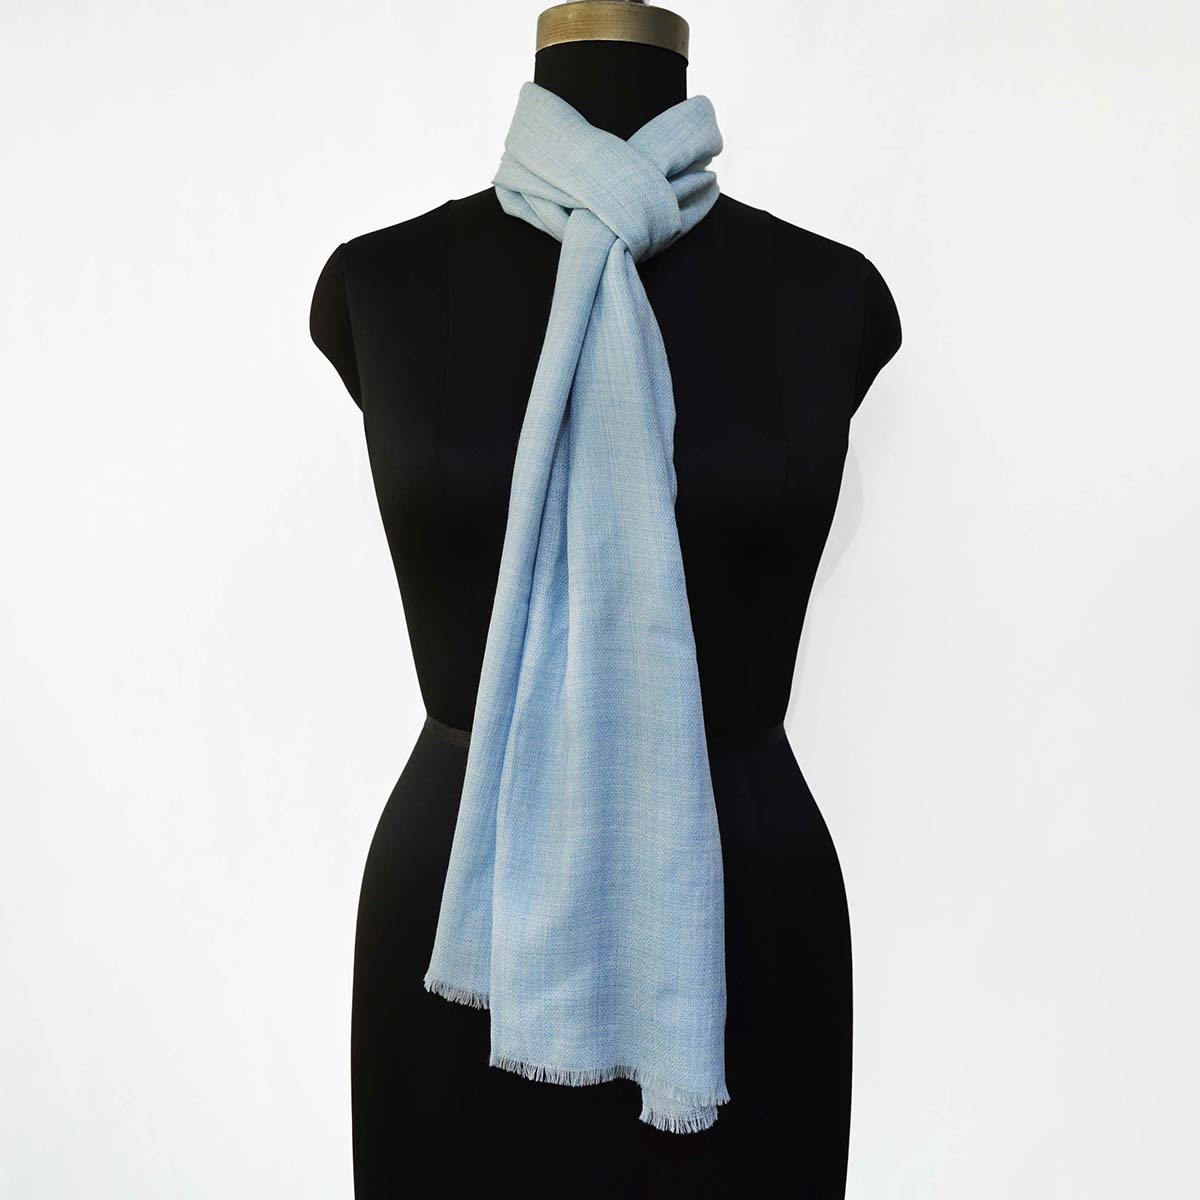 POWDER BLUE fine wool scarf women/men, solid colour, reversible, fashion shawl or stole or wrap, unisex